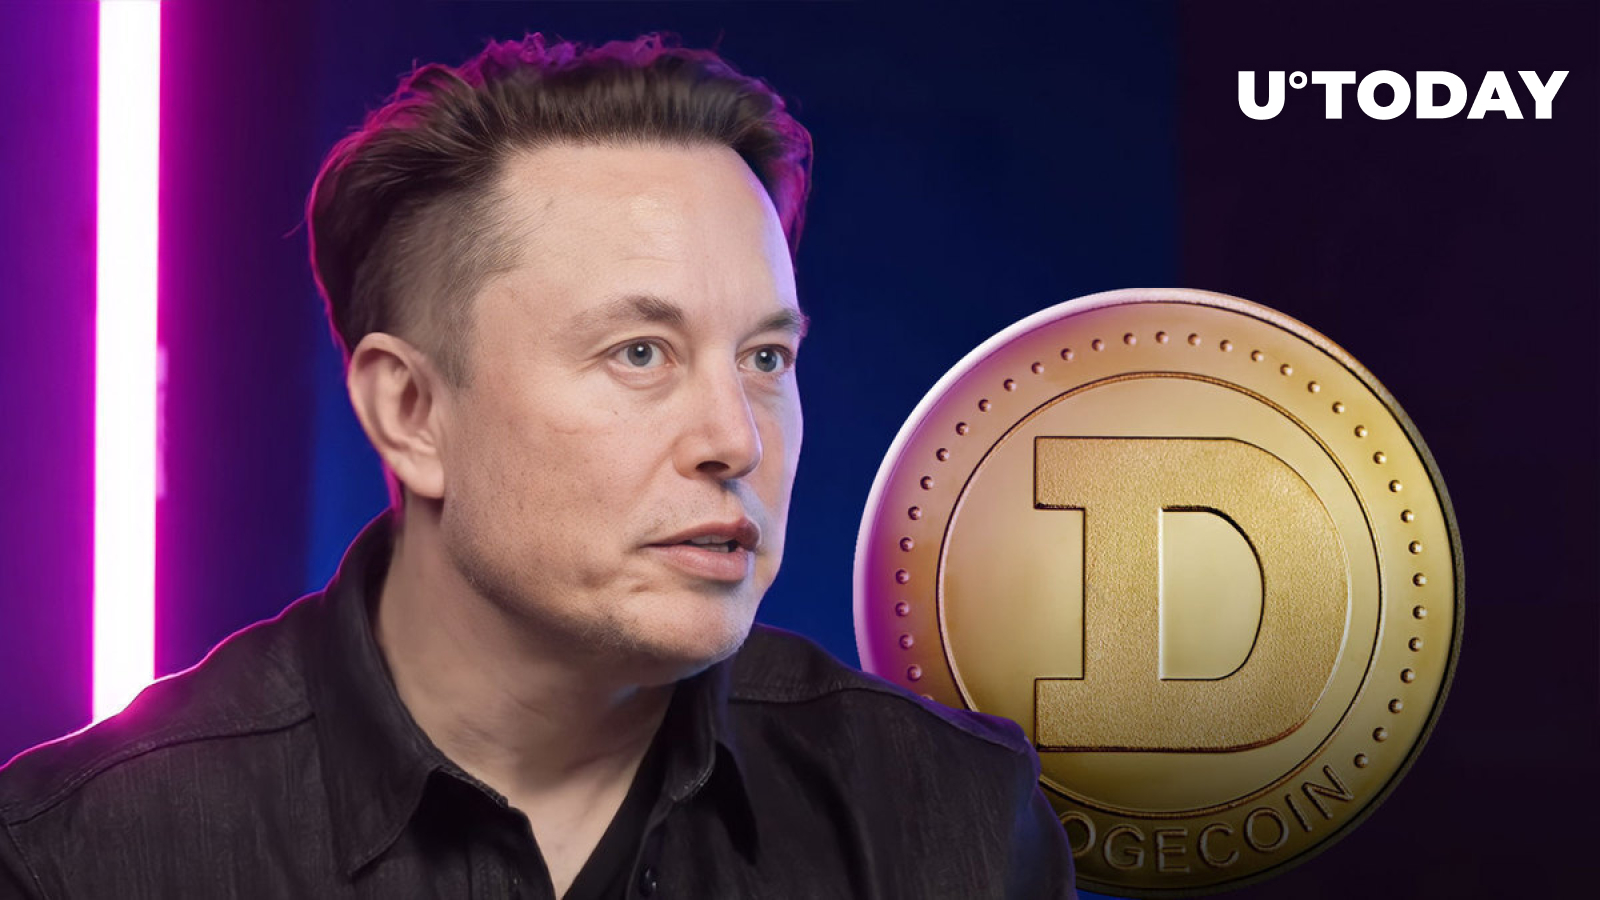 Elon Musk’s DOGE-Themed Post Sets Twitter on Fire